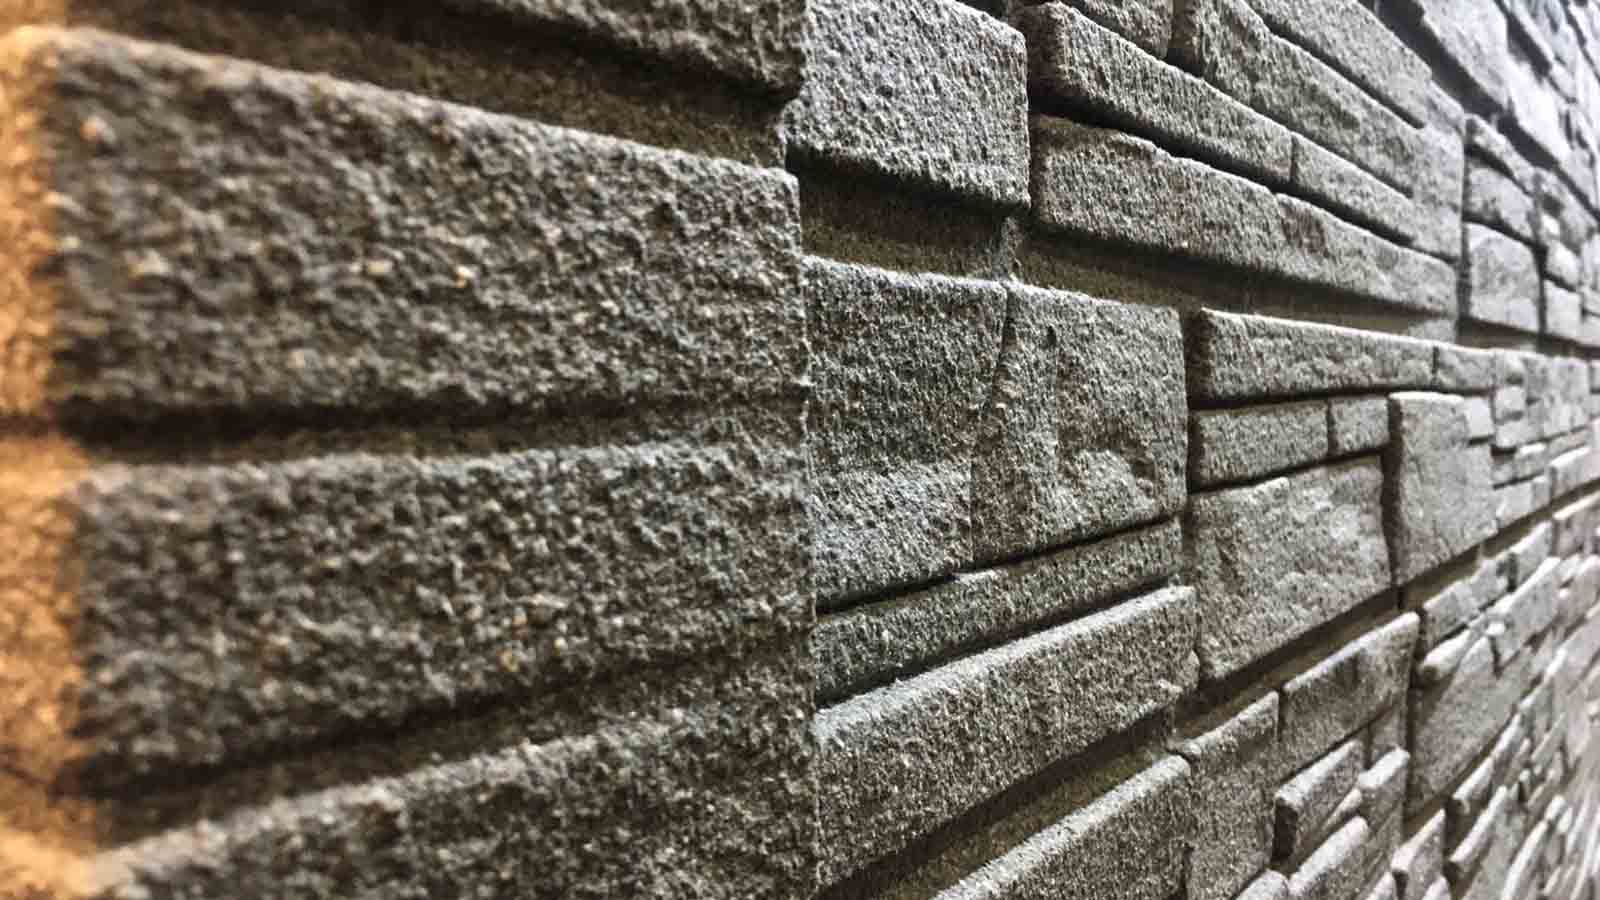 ADD STONE 的亞仿石牆板近距離看也沒有問題，石頭的質感和紋理有如真實石材所搭建的牆面